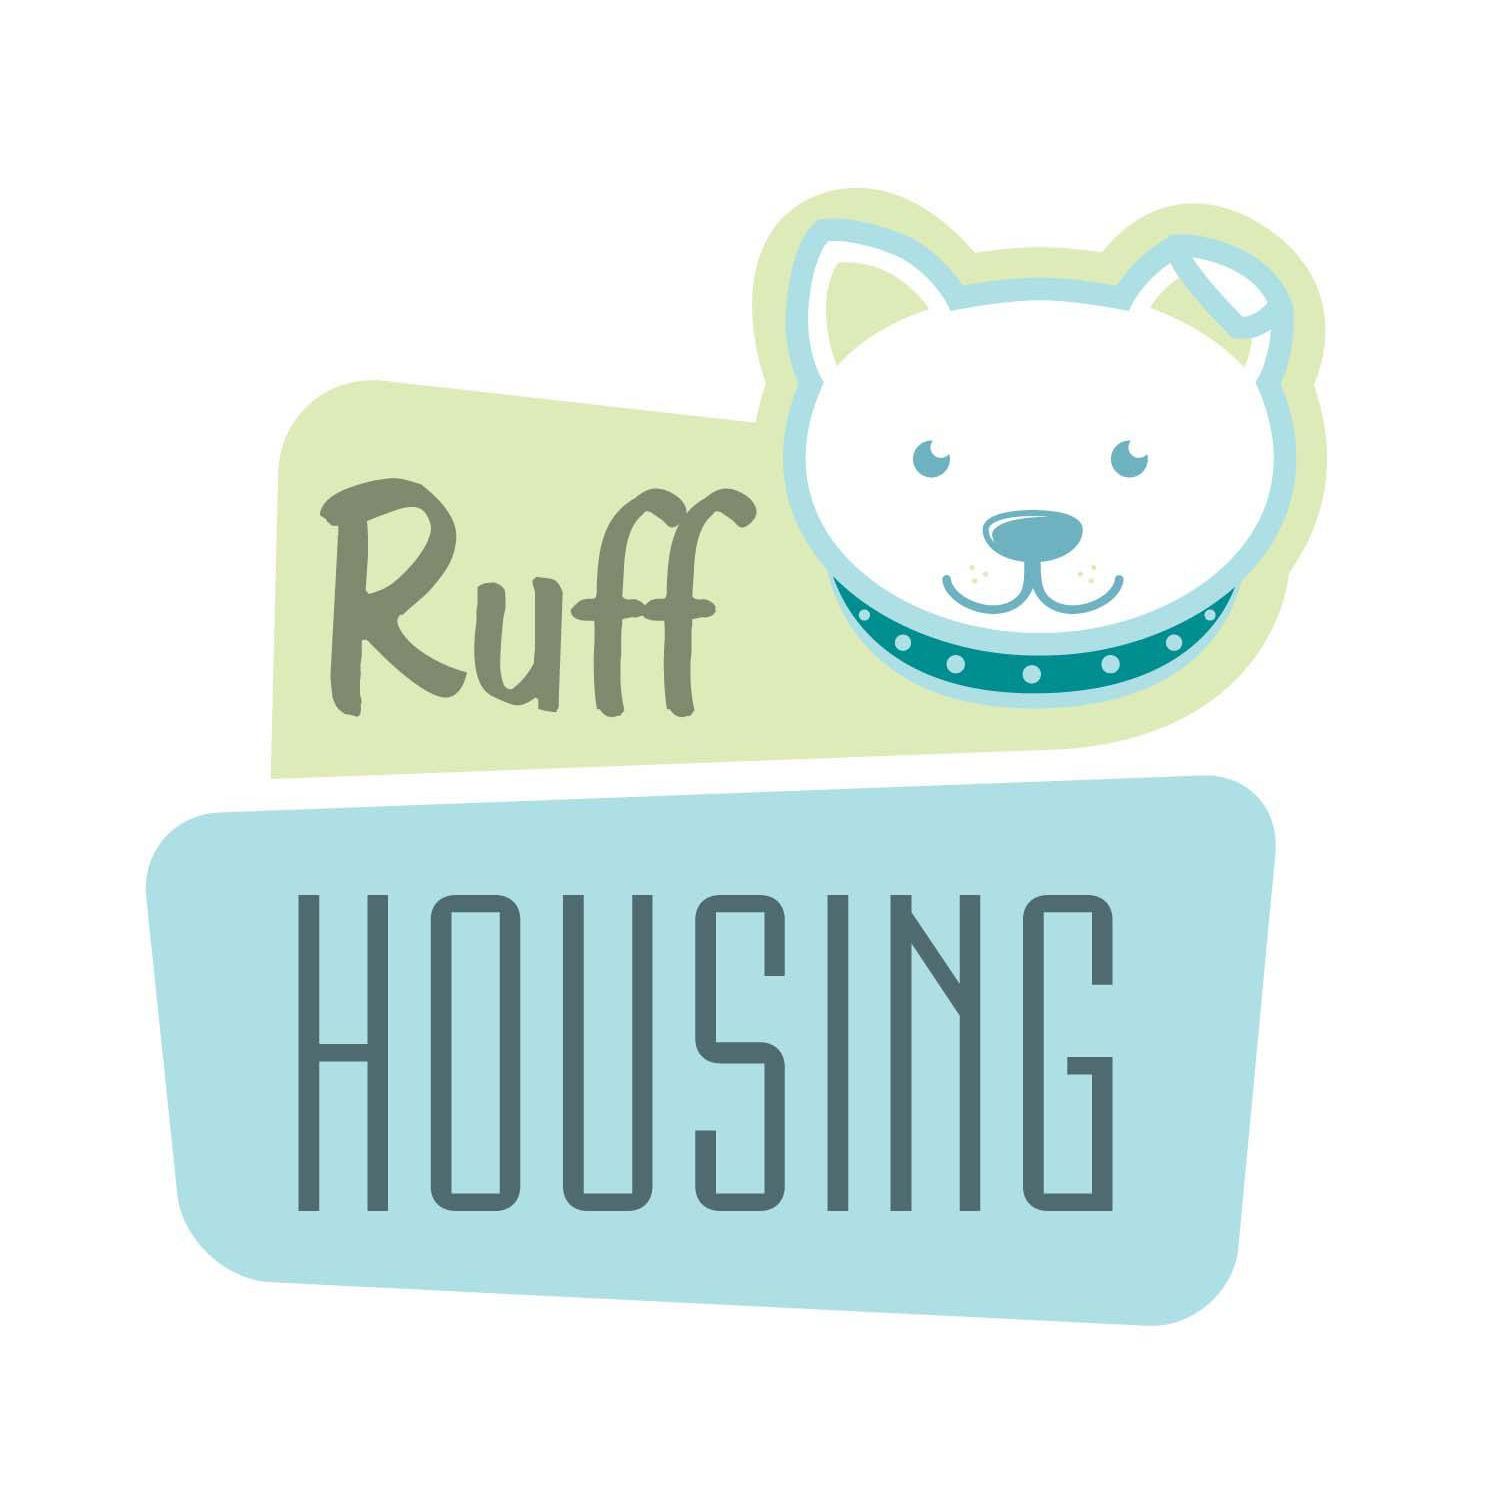 Ruff Housing Country Club